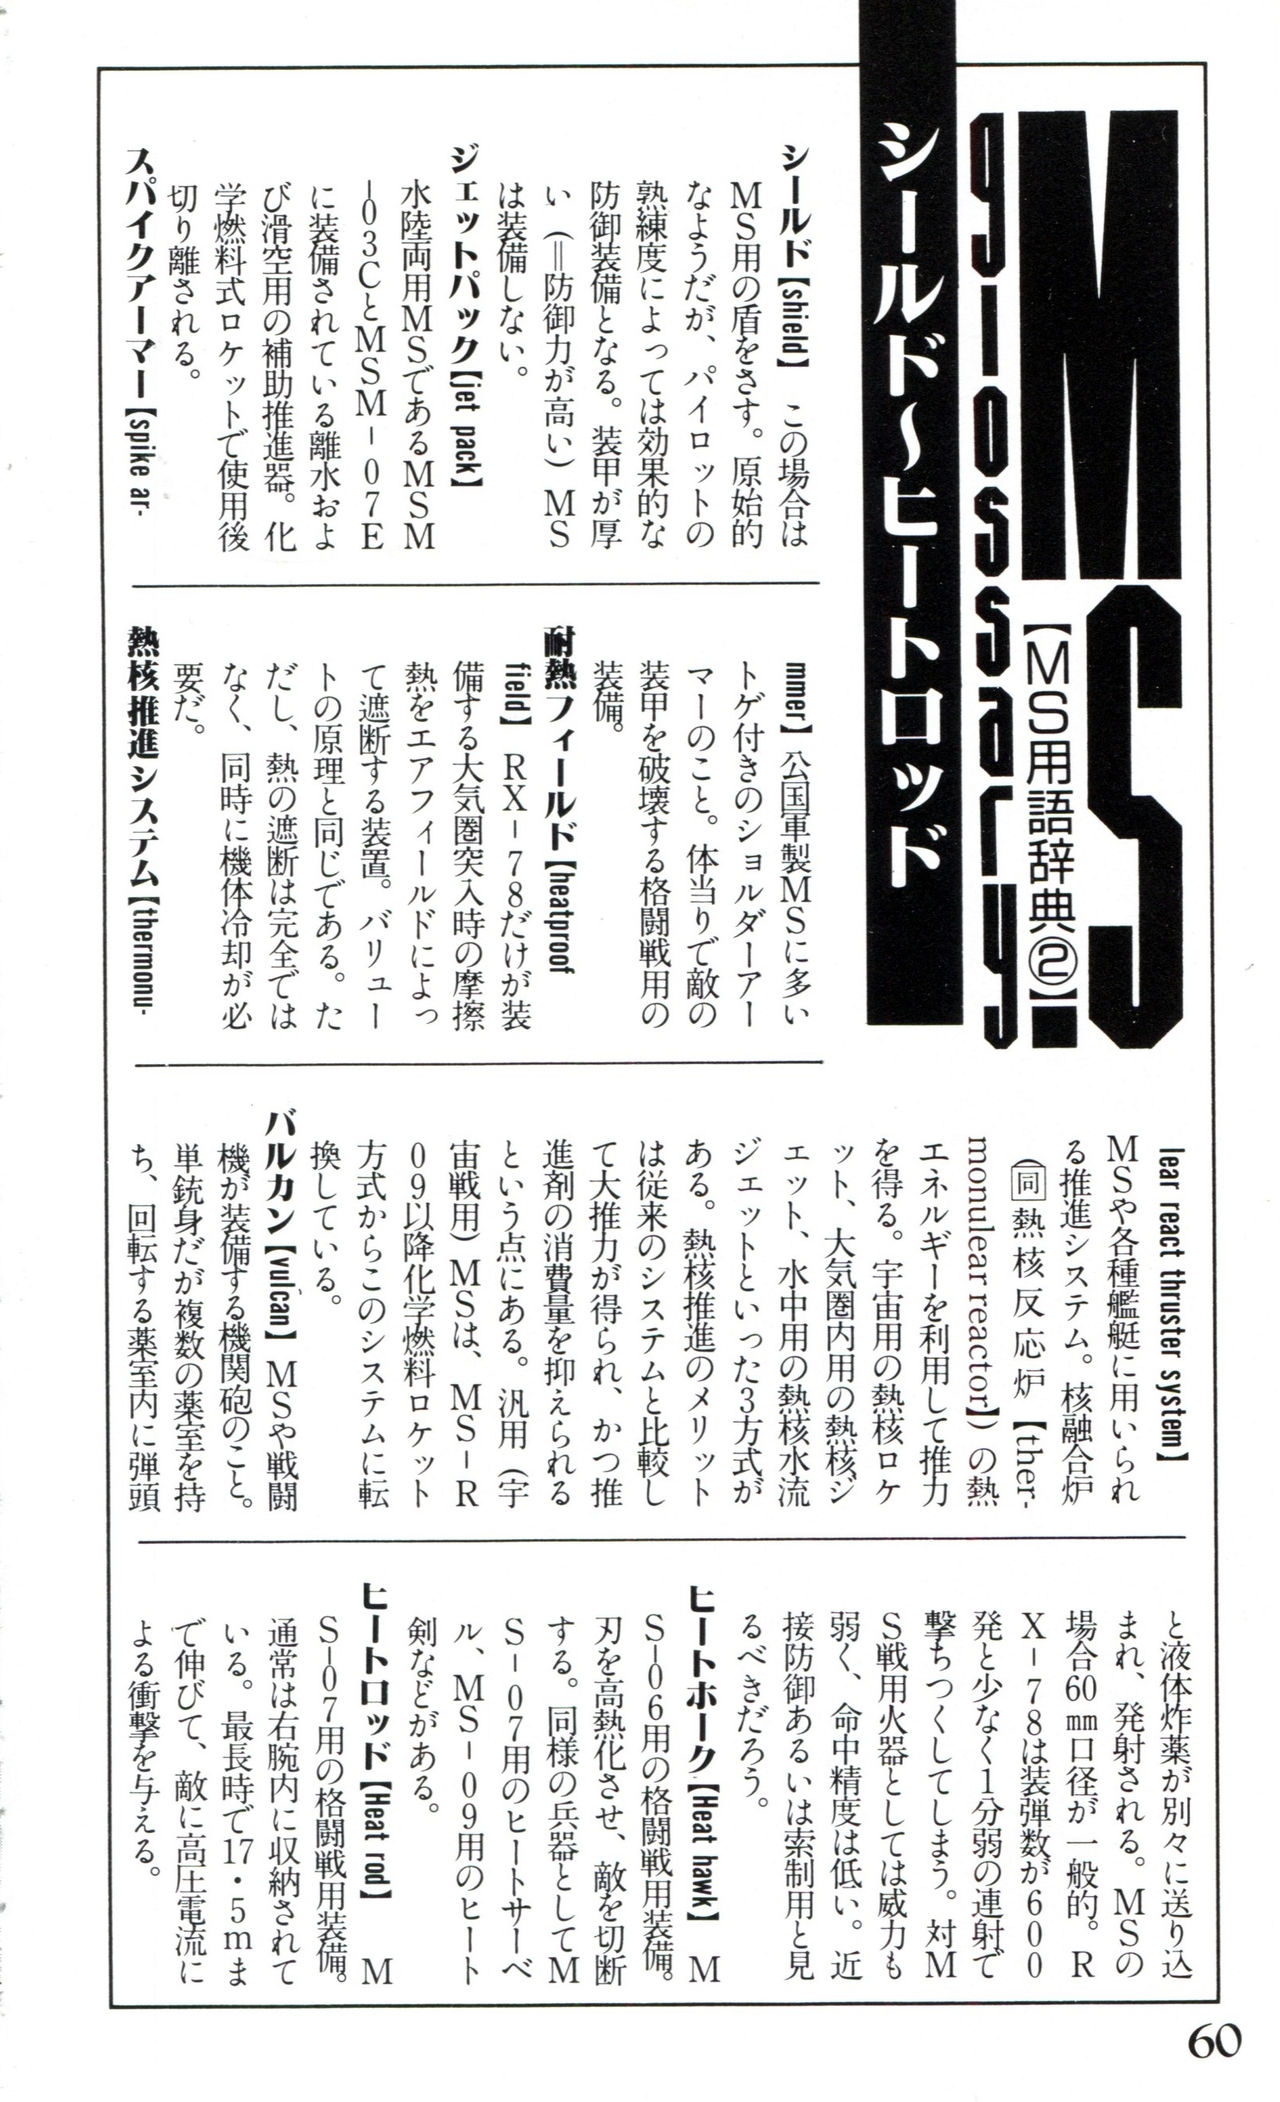 Mobile Suit Gundam U.C. Box MS Gundam Encyclopedia NO.01 - Mobile Suit Gundam 59